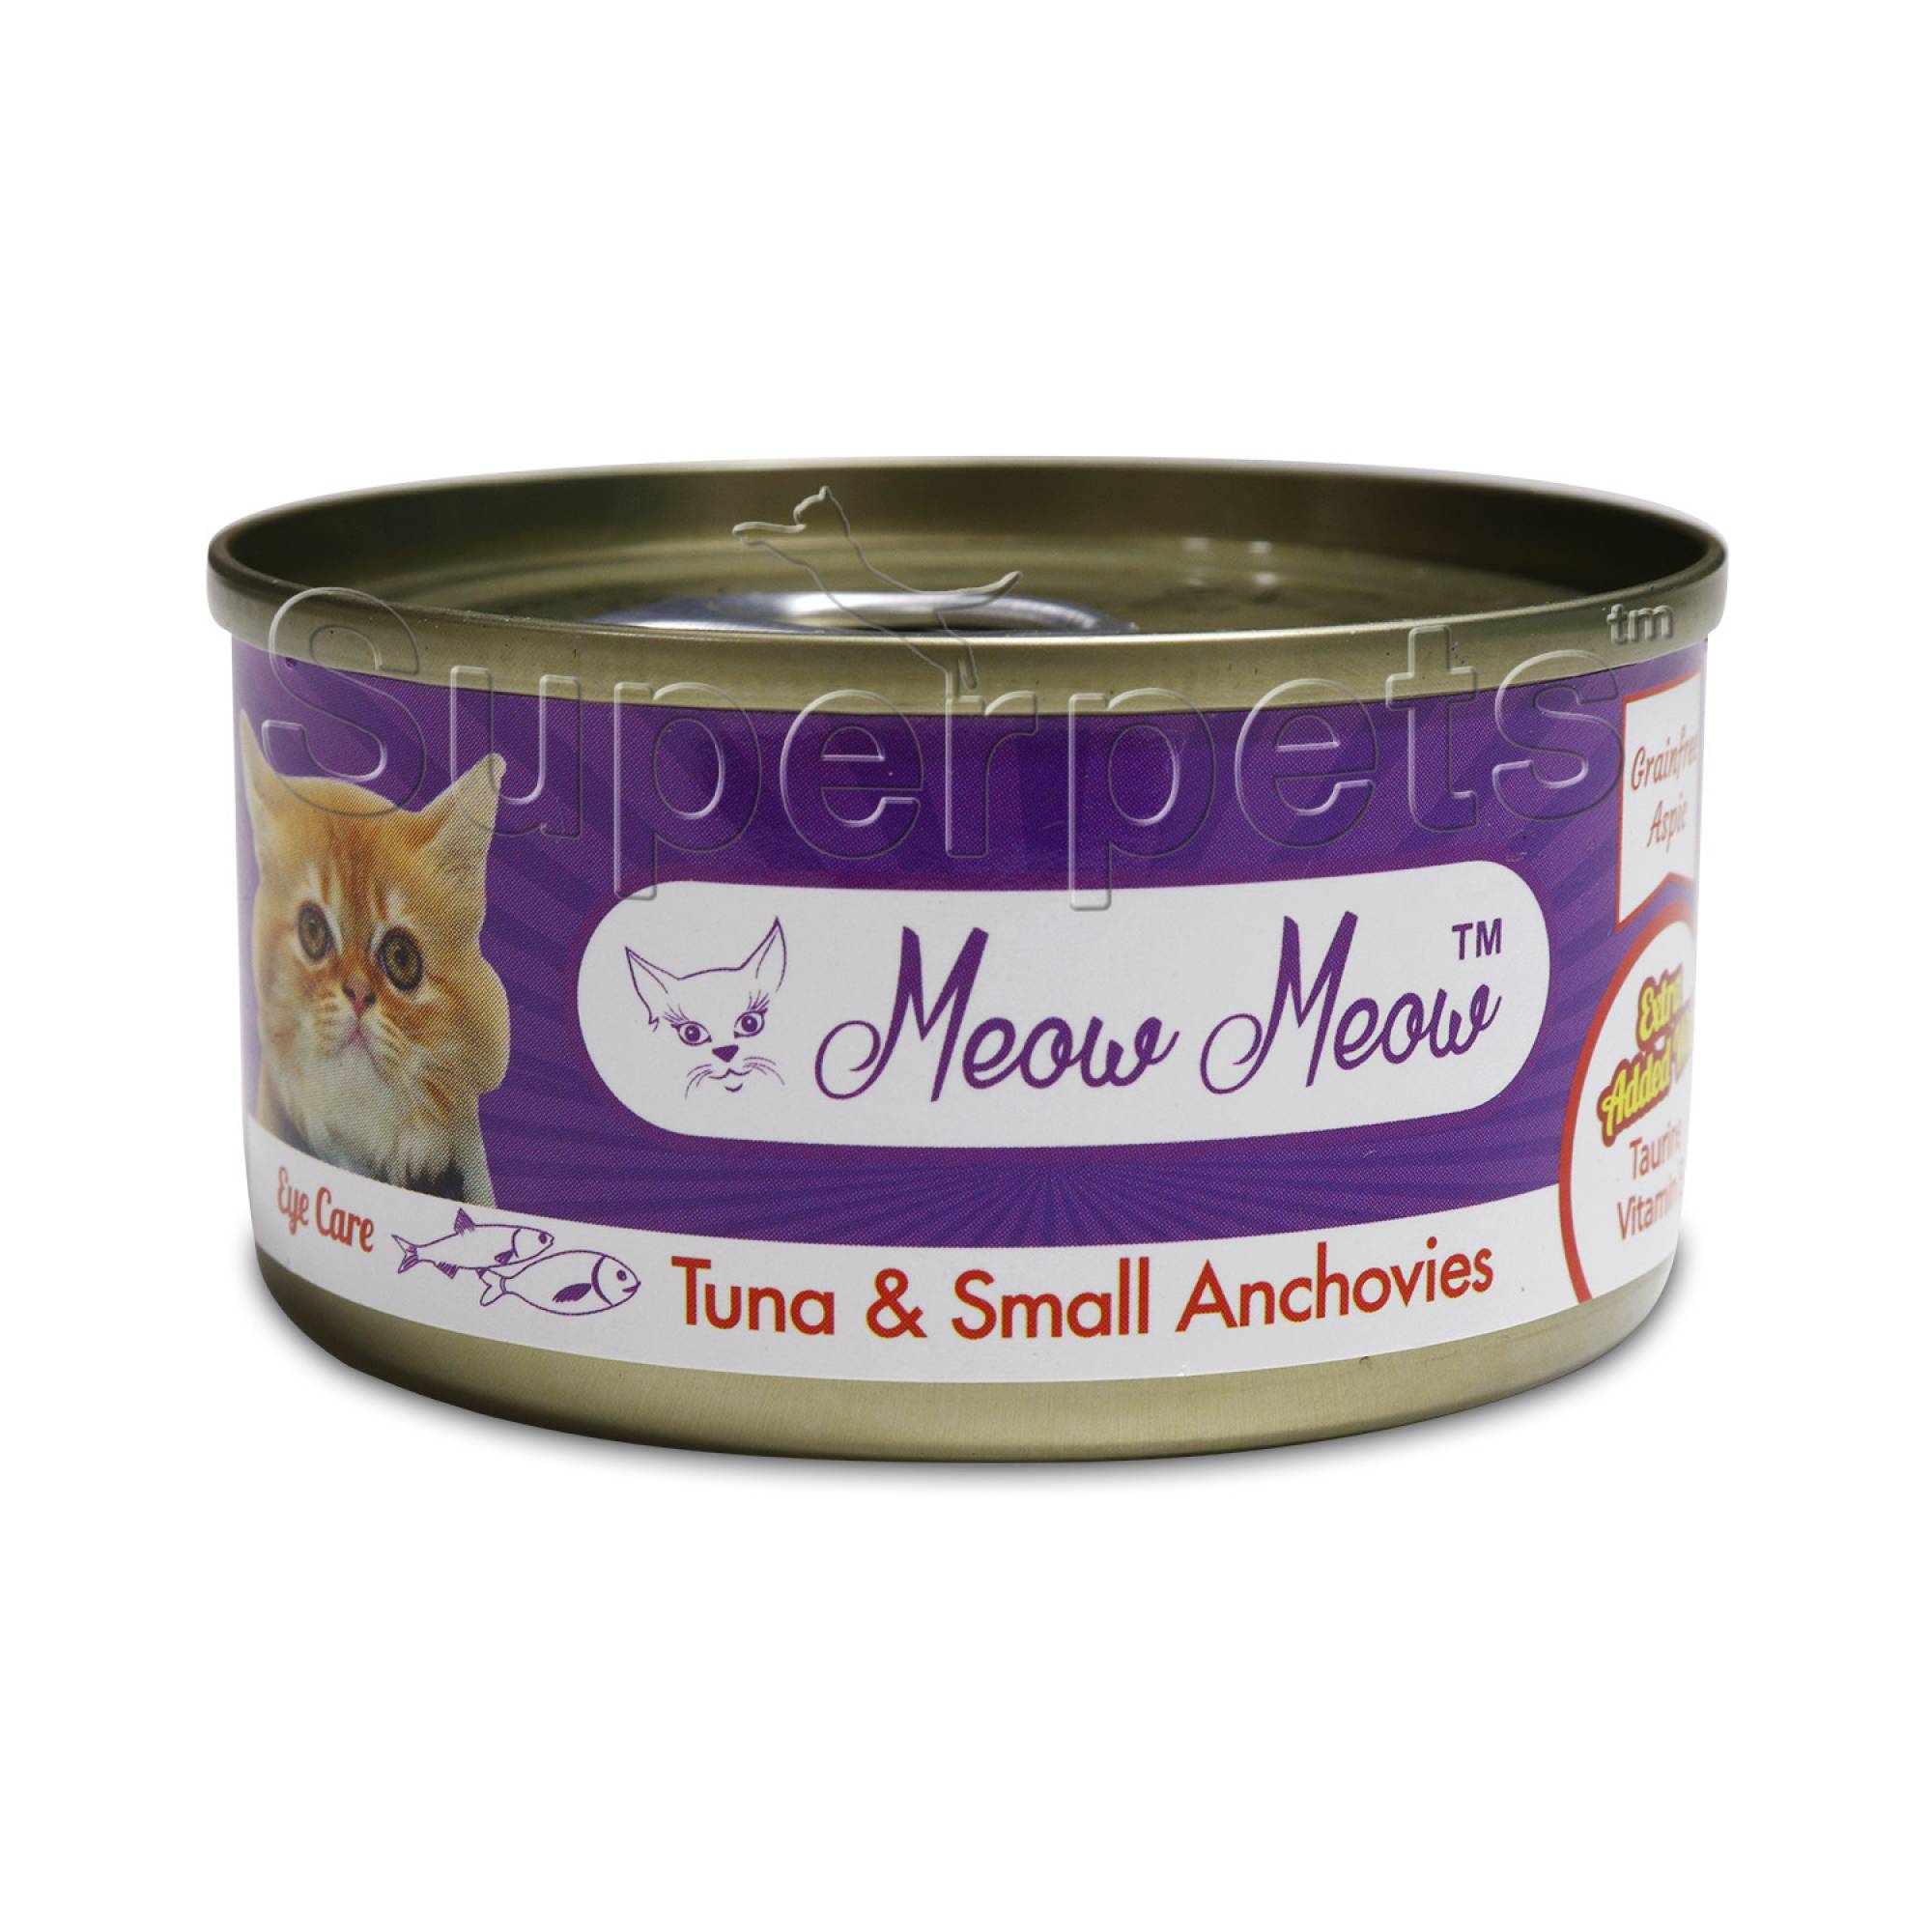 Meow Meow - Tuna & Small Anchovies - Grain Free 80g x 24pcs (1 carton)